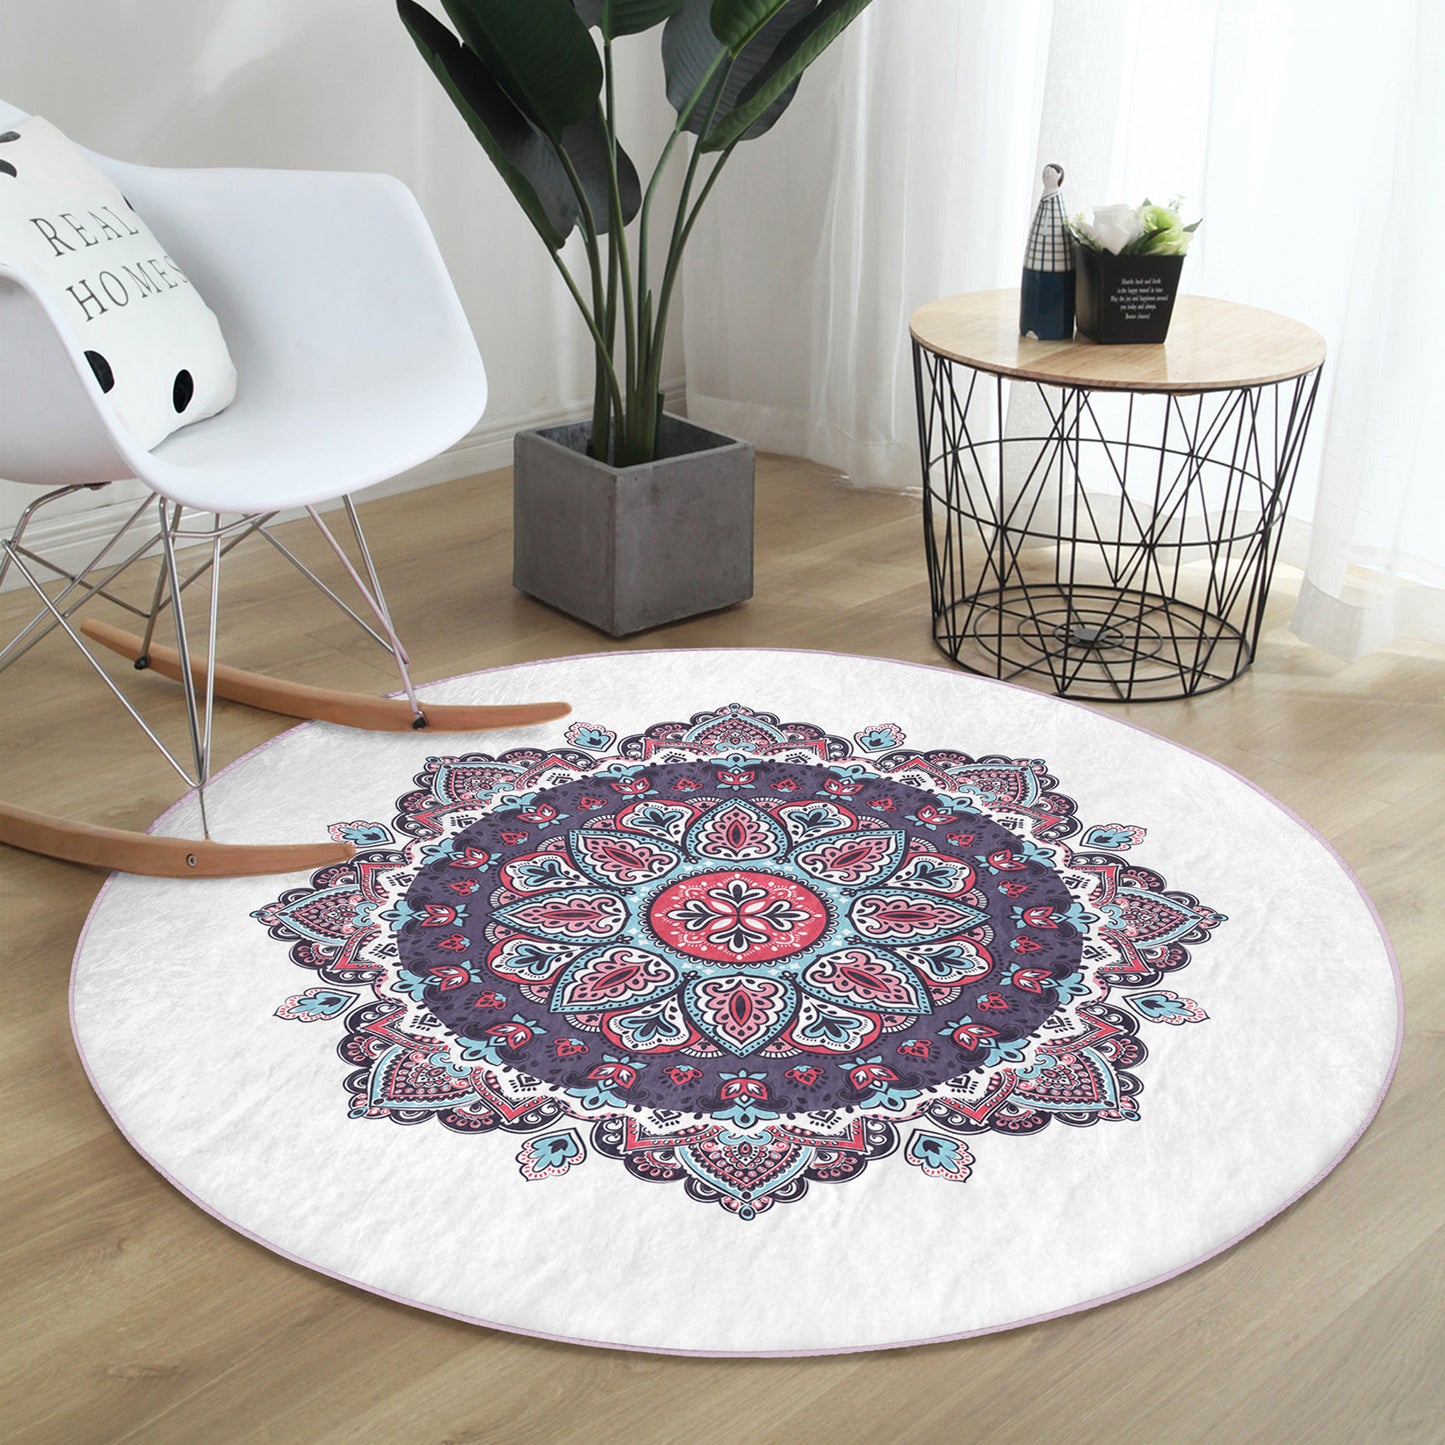 Homeezone Round Rug - Versatile Meditation Room Decor